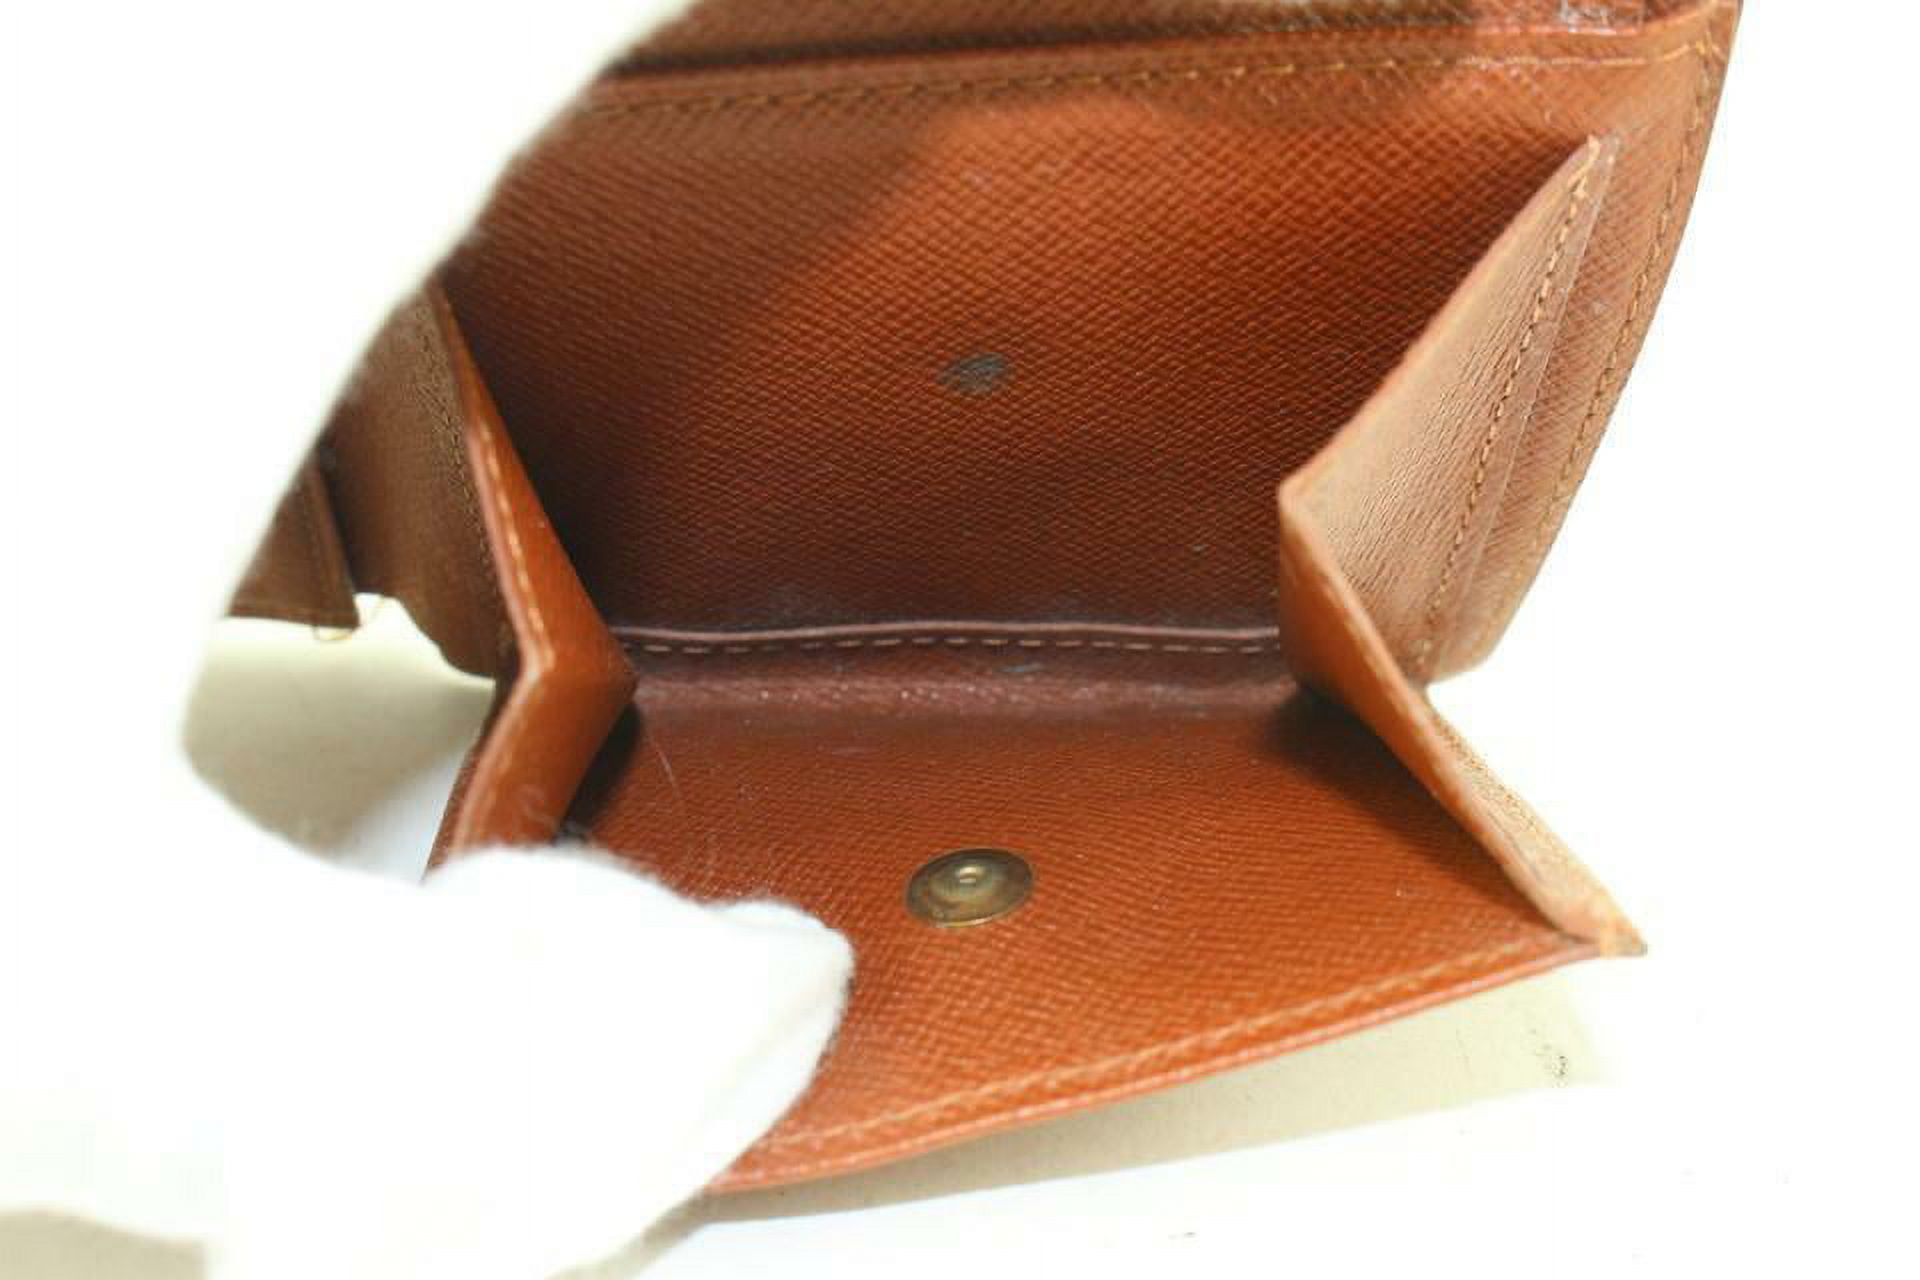 Louis Vuitton Monogram Men's Wallet Marco Florin Slender Multiple 830lv19W  